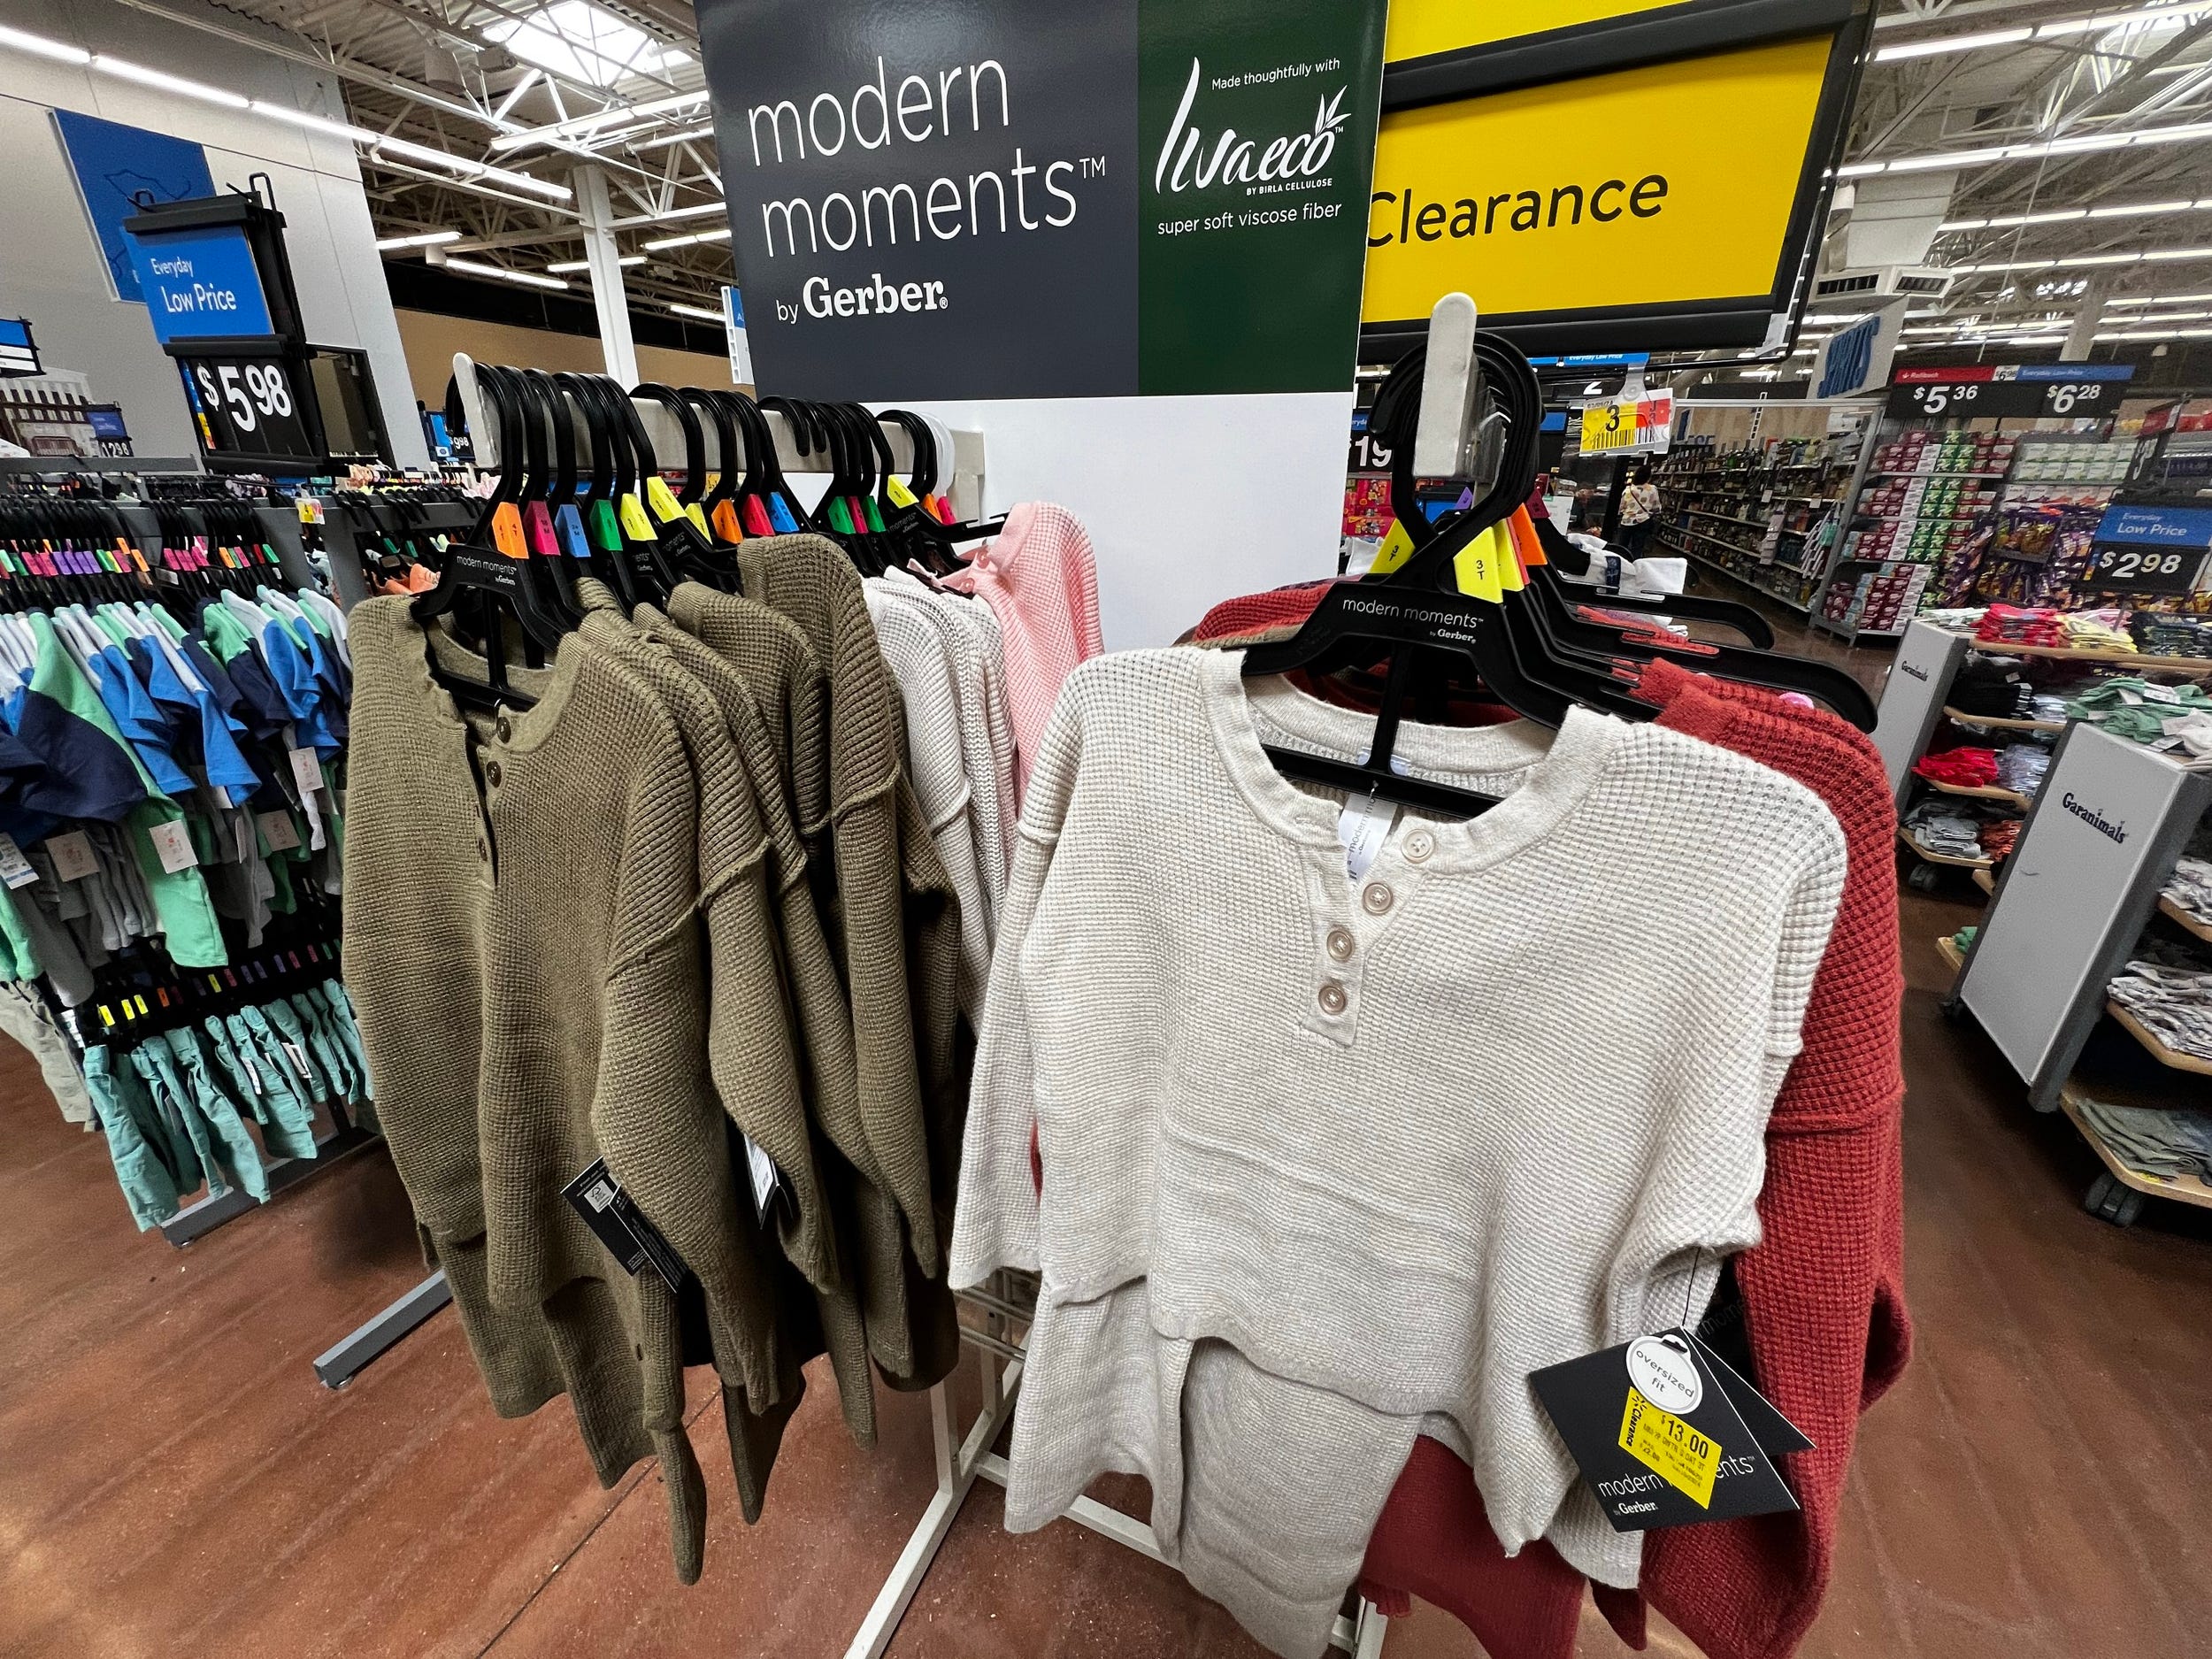 Gerber-Kinderkleidung bei Walmart.